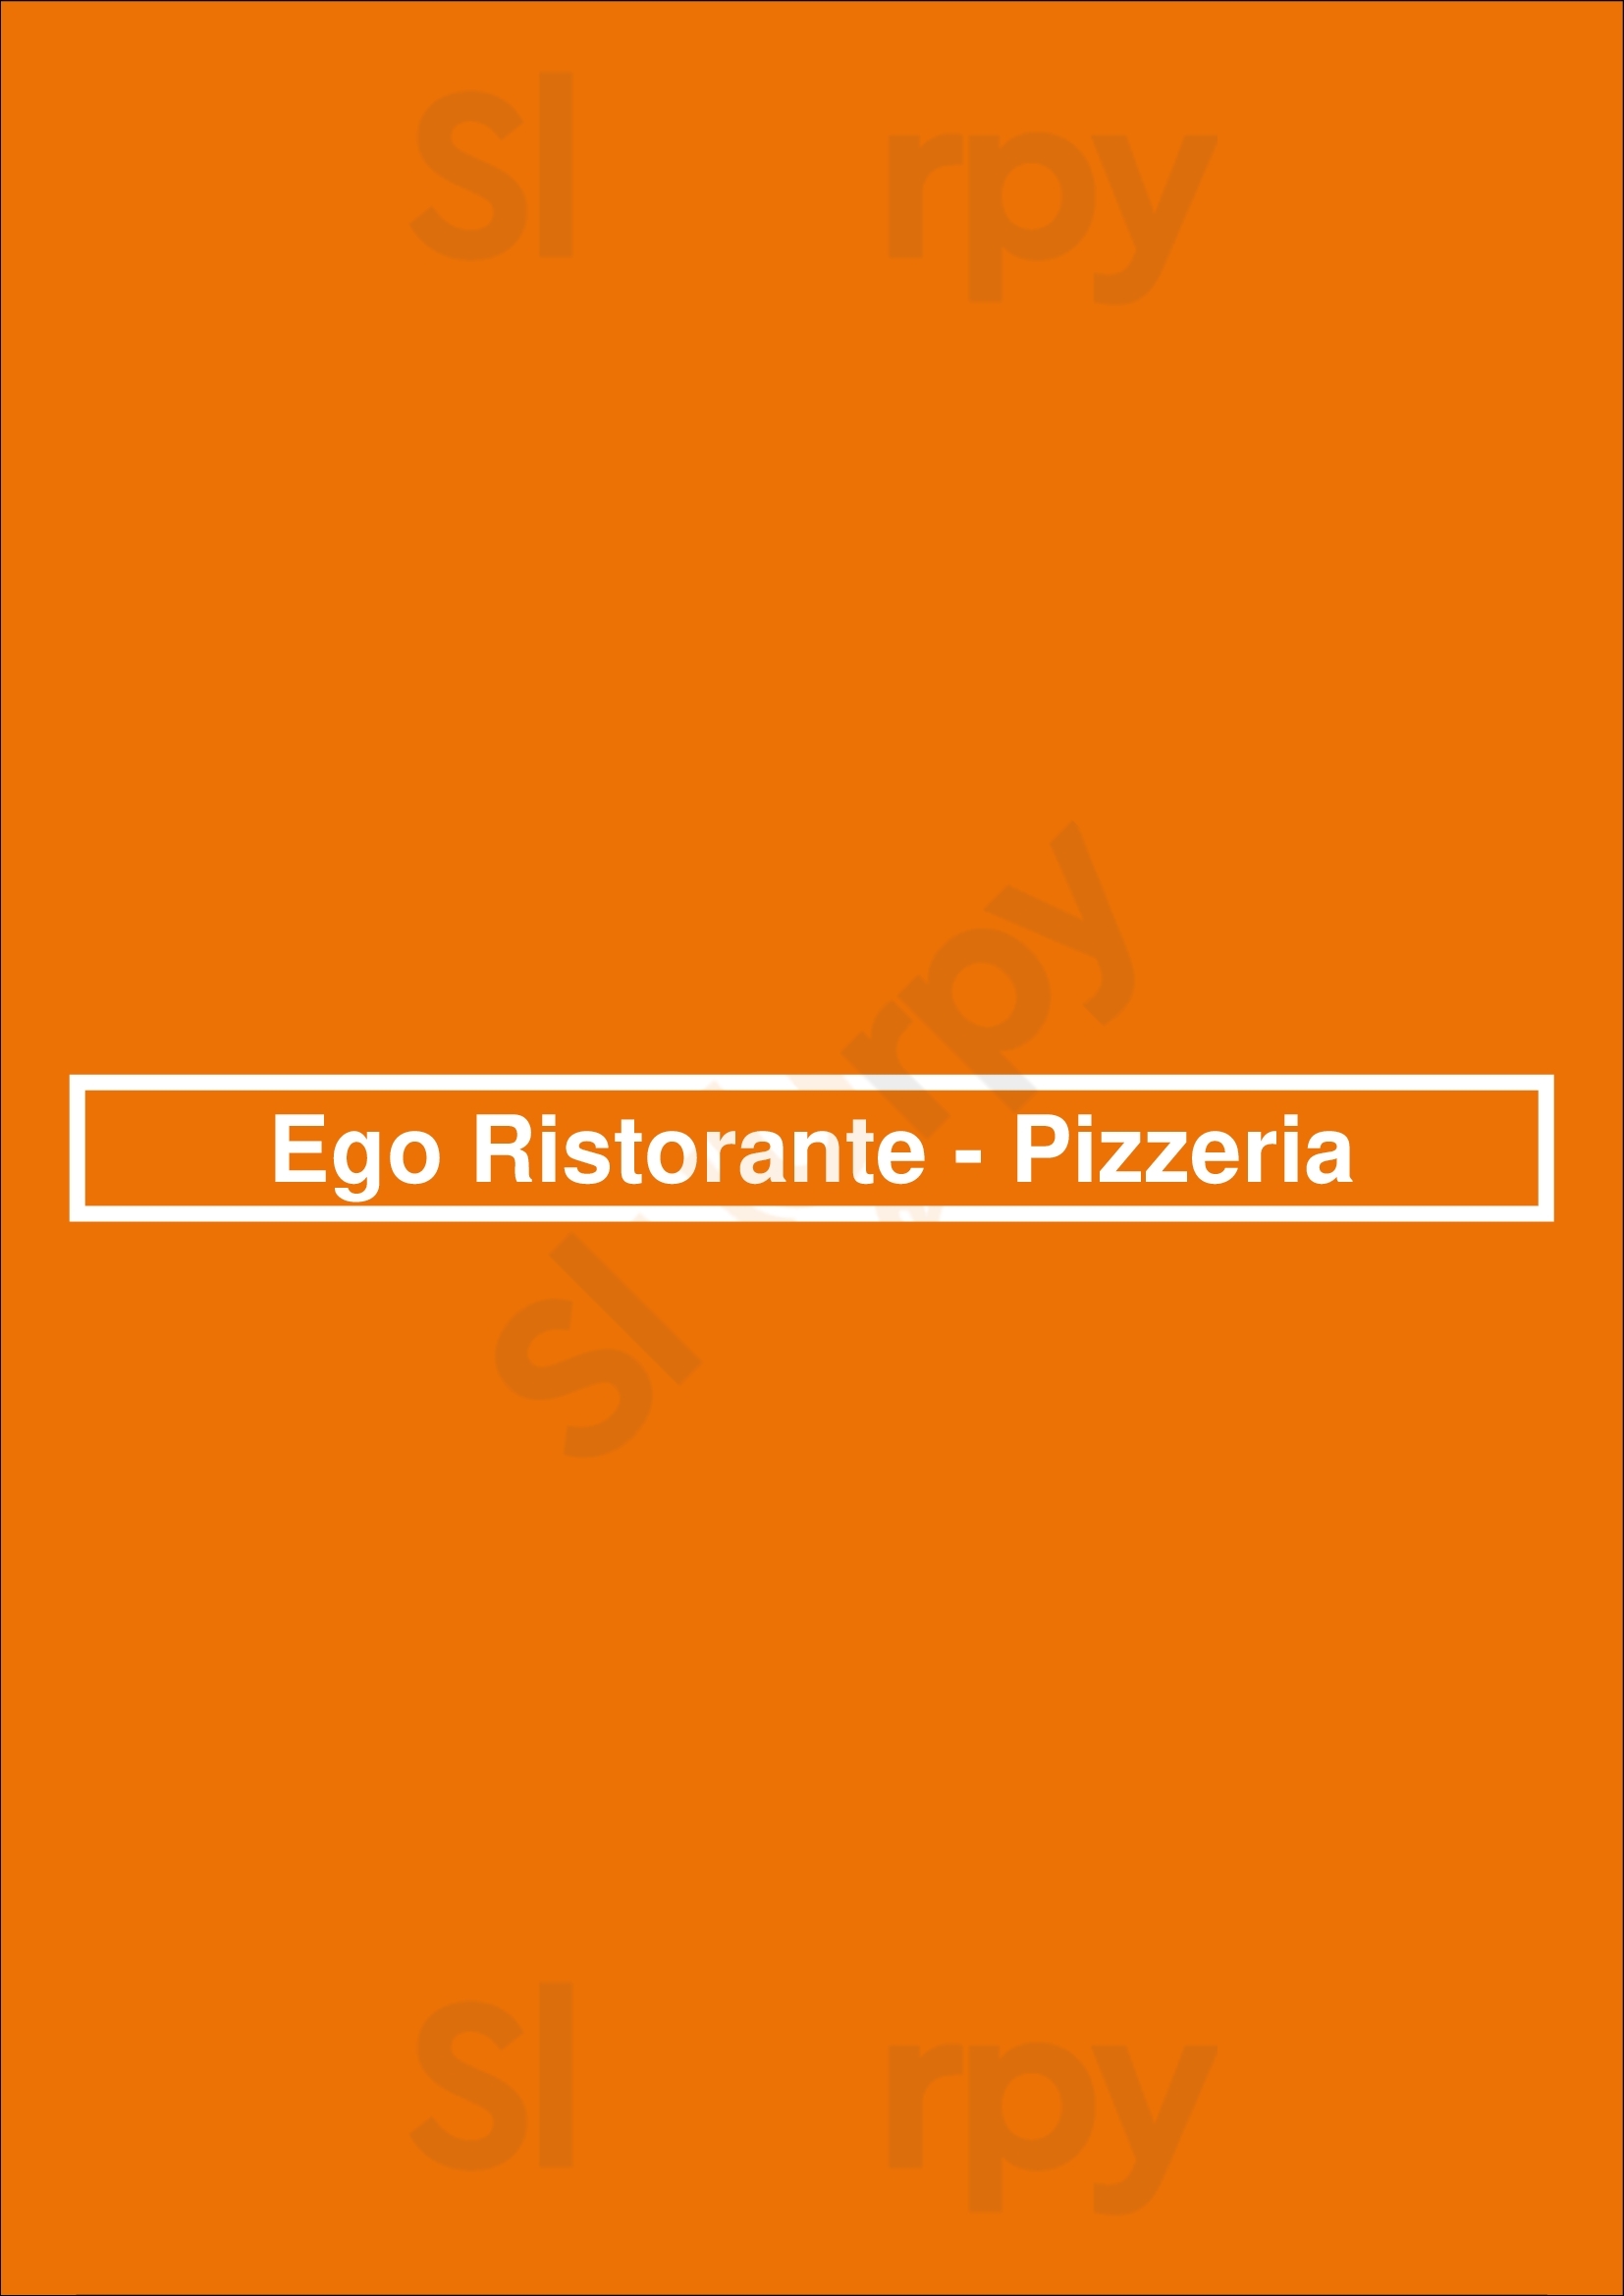 Ego Ristorante - Pizzeria Bruxelles Menu - 1